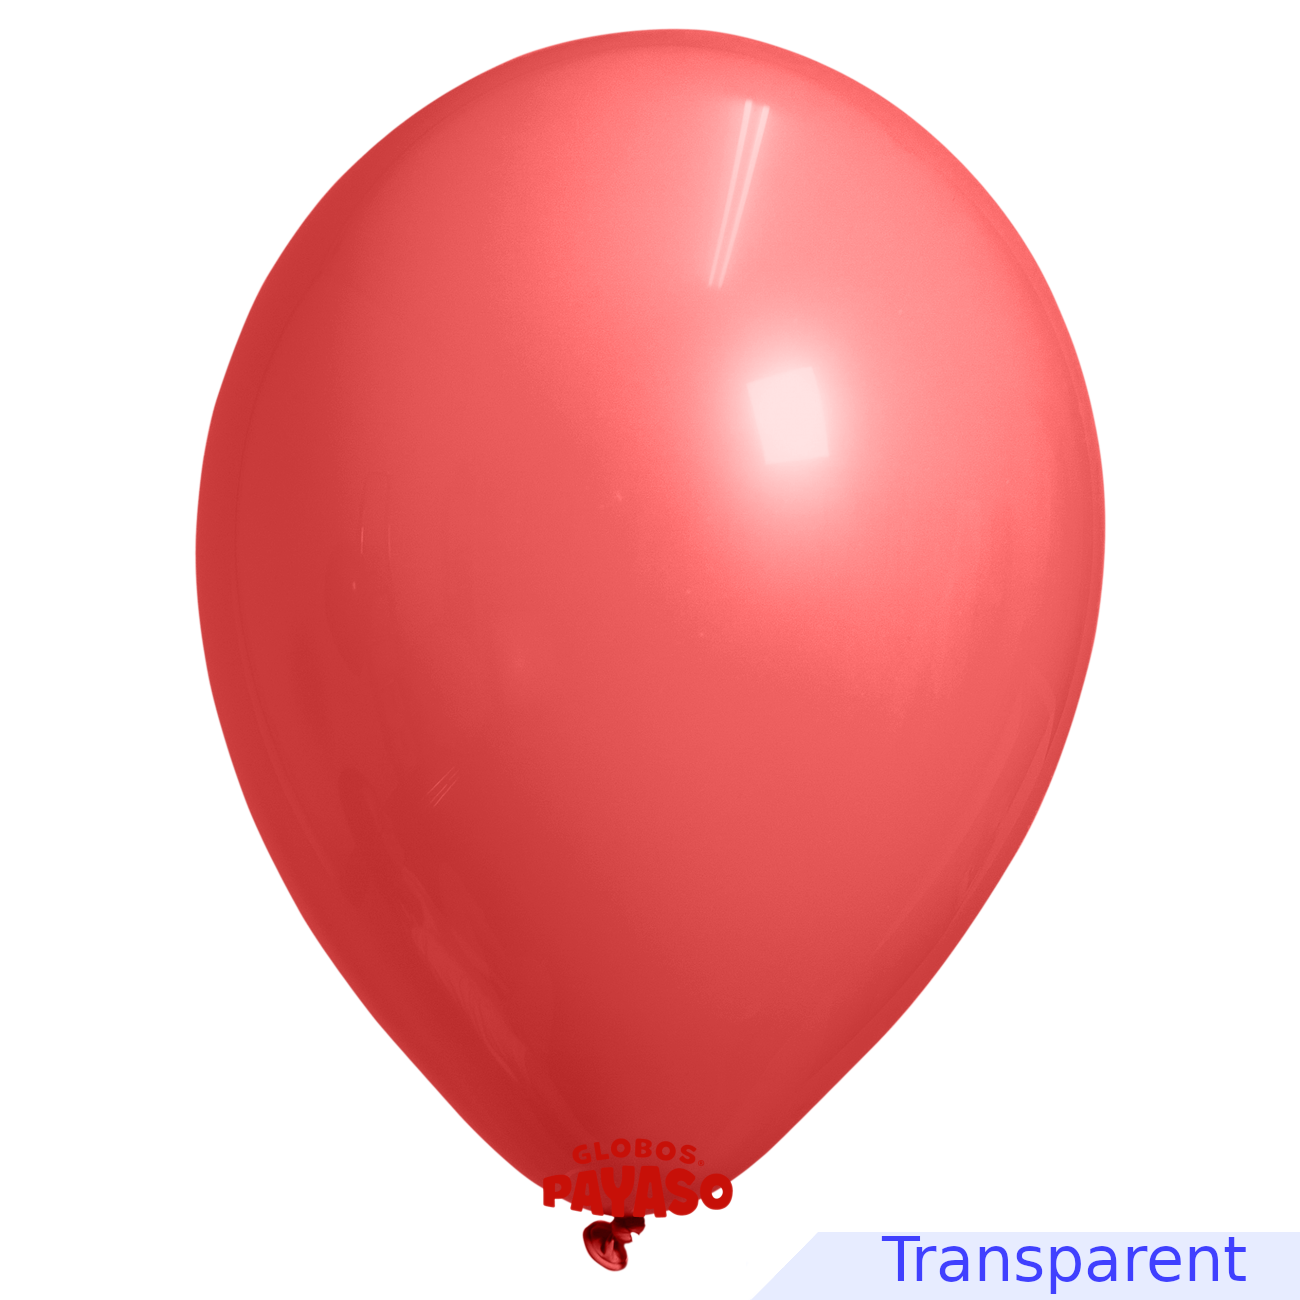 Globos Payaso / Unique 12" Bright Red Translucid Decorator Balloon